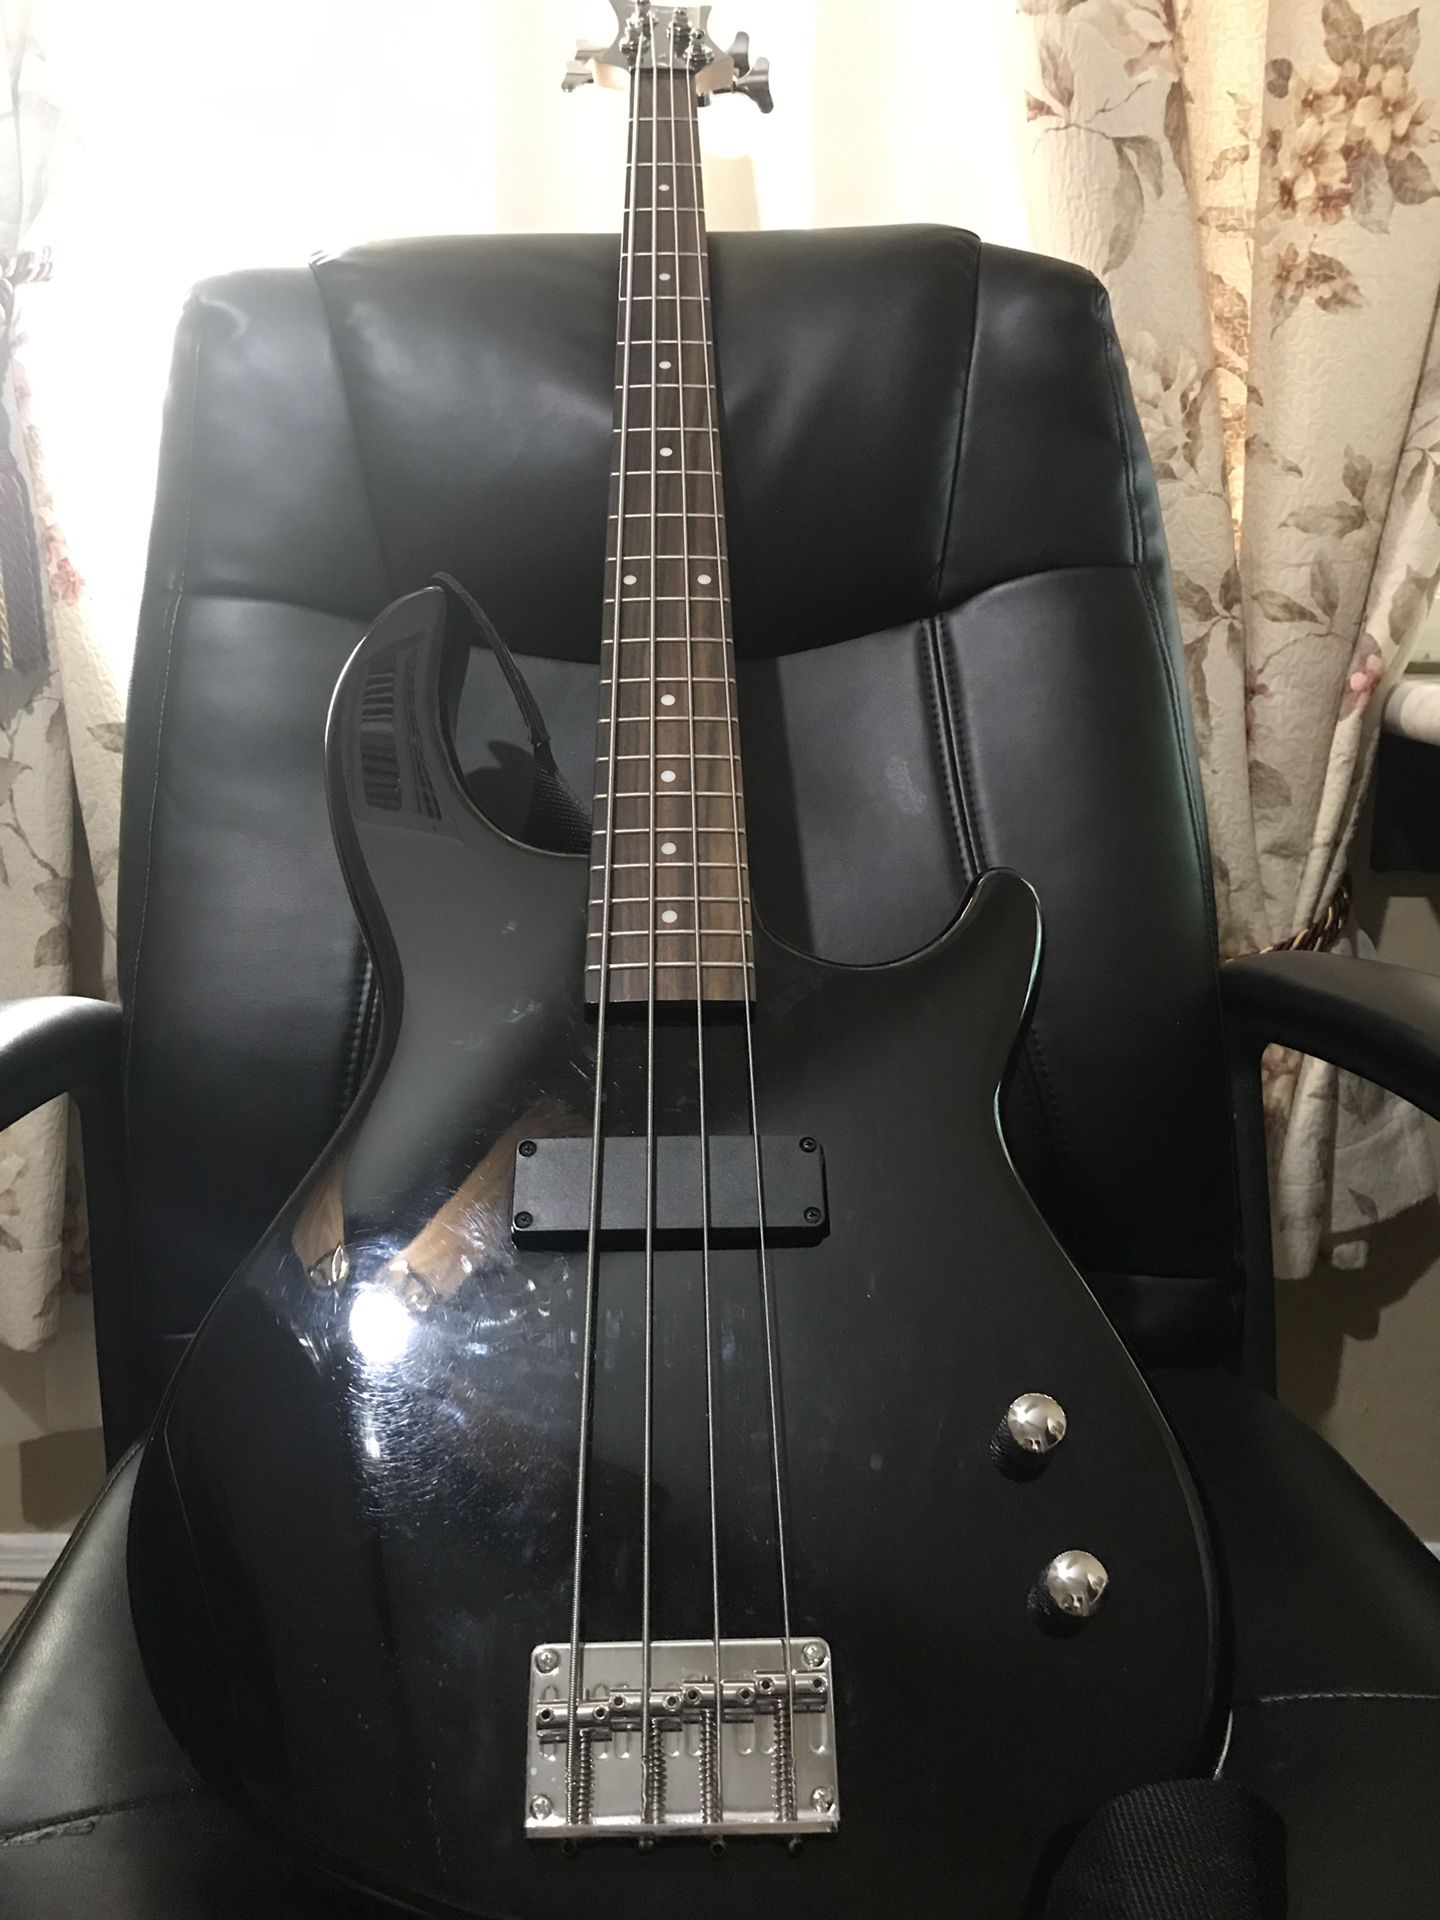 Dean Bass guitar (4 string)